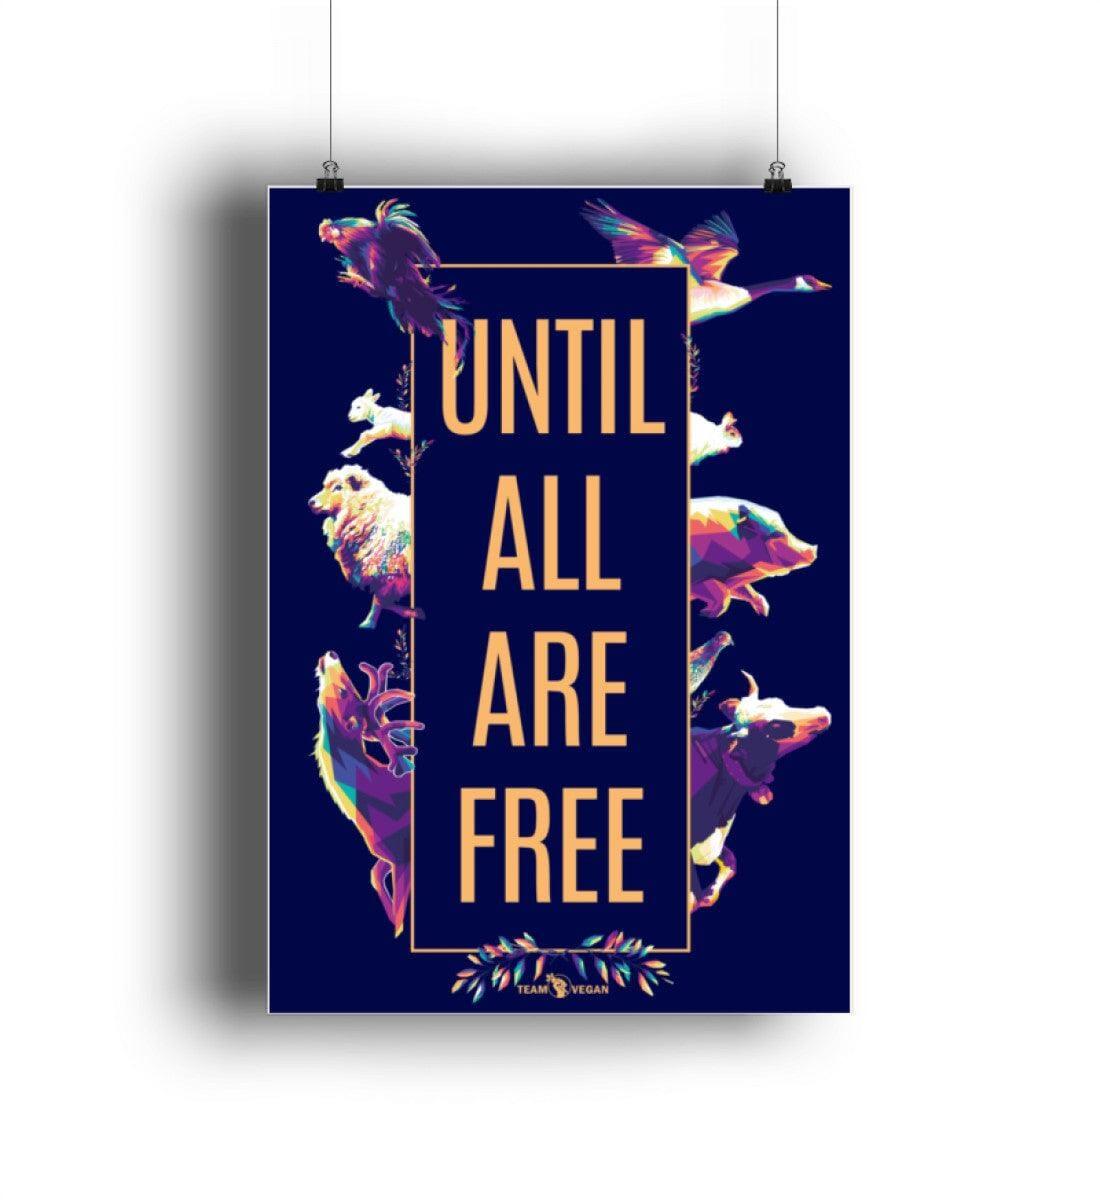 Until all are free - Poster - Team Vegan © vegan t shirt